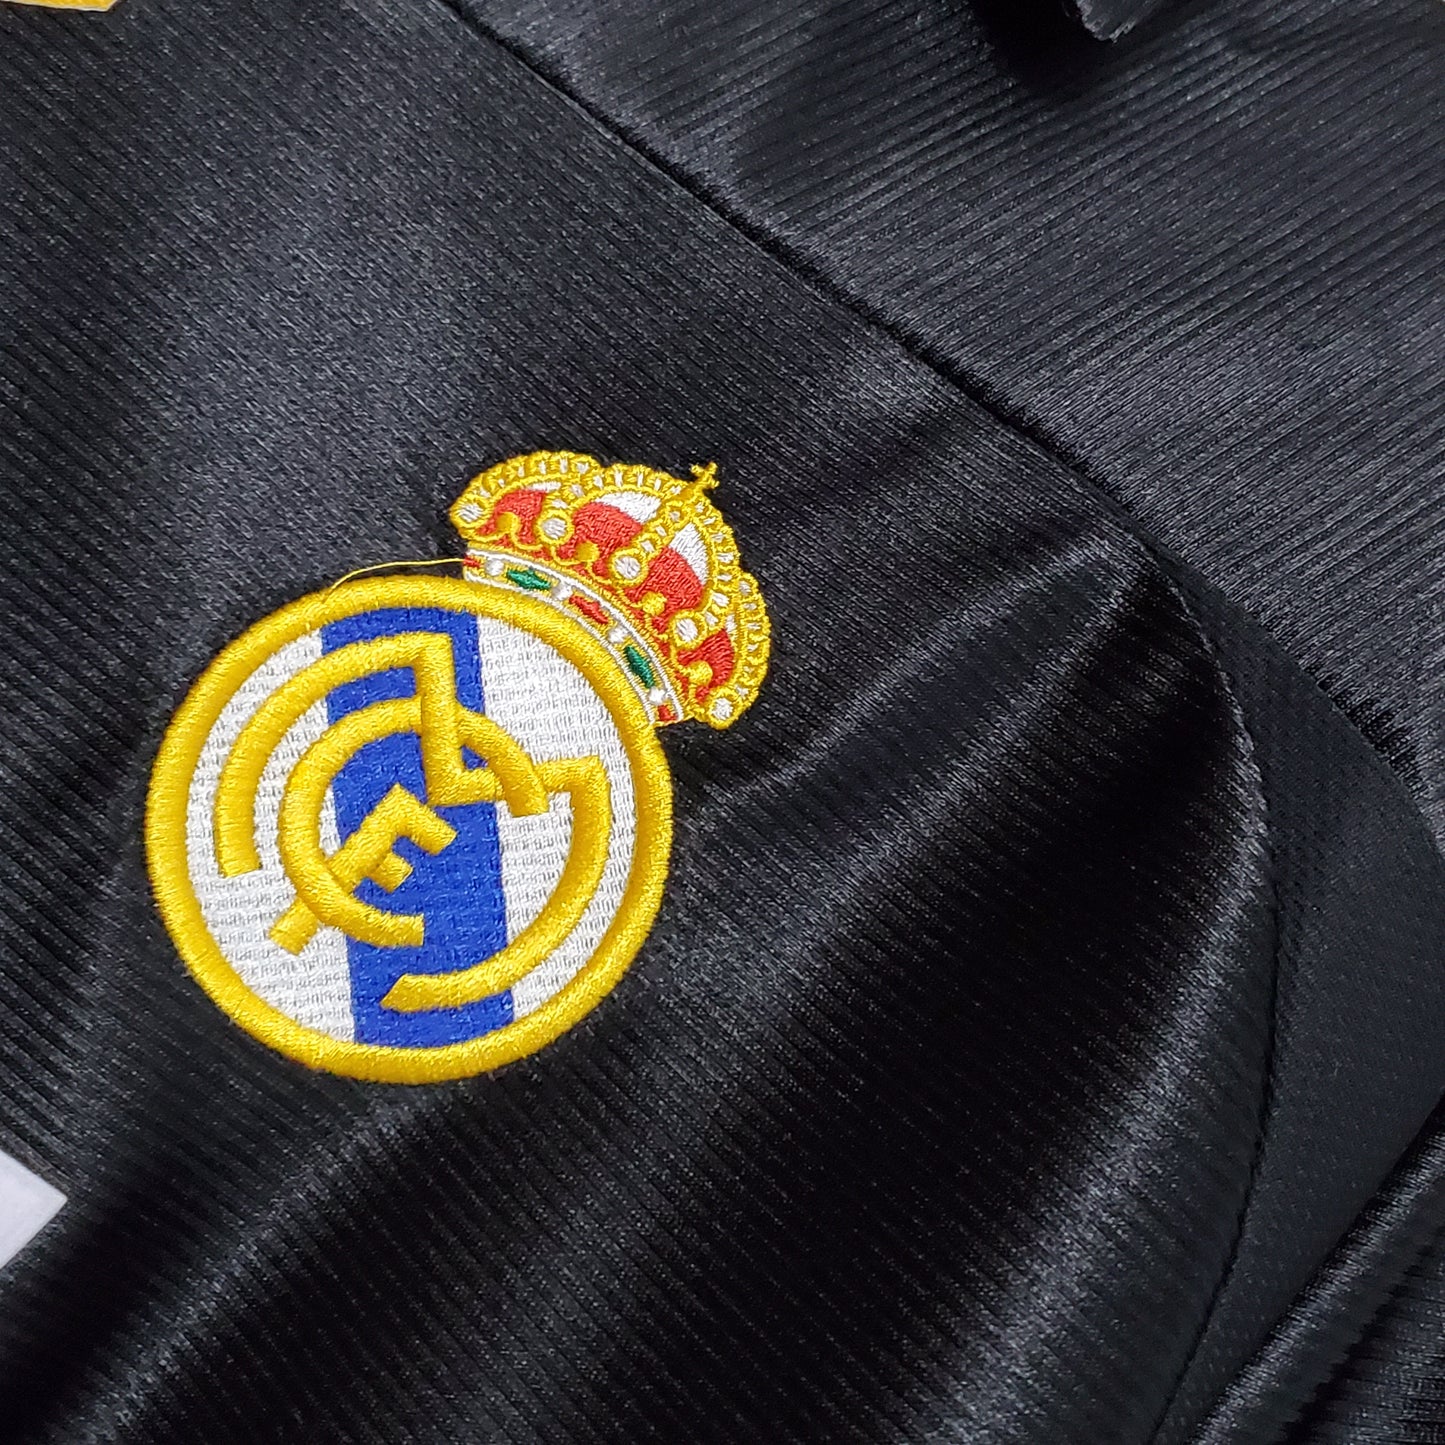 Real Madrid 98-99 Away Shirt